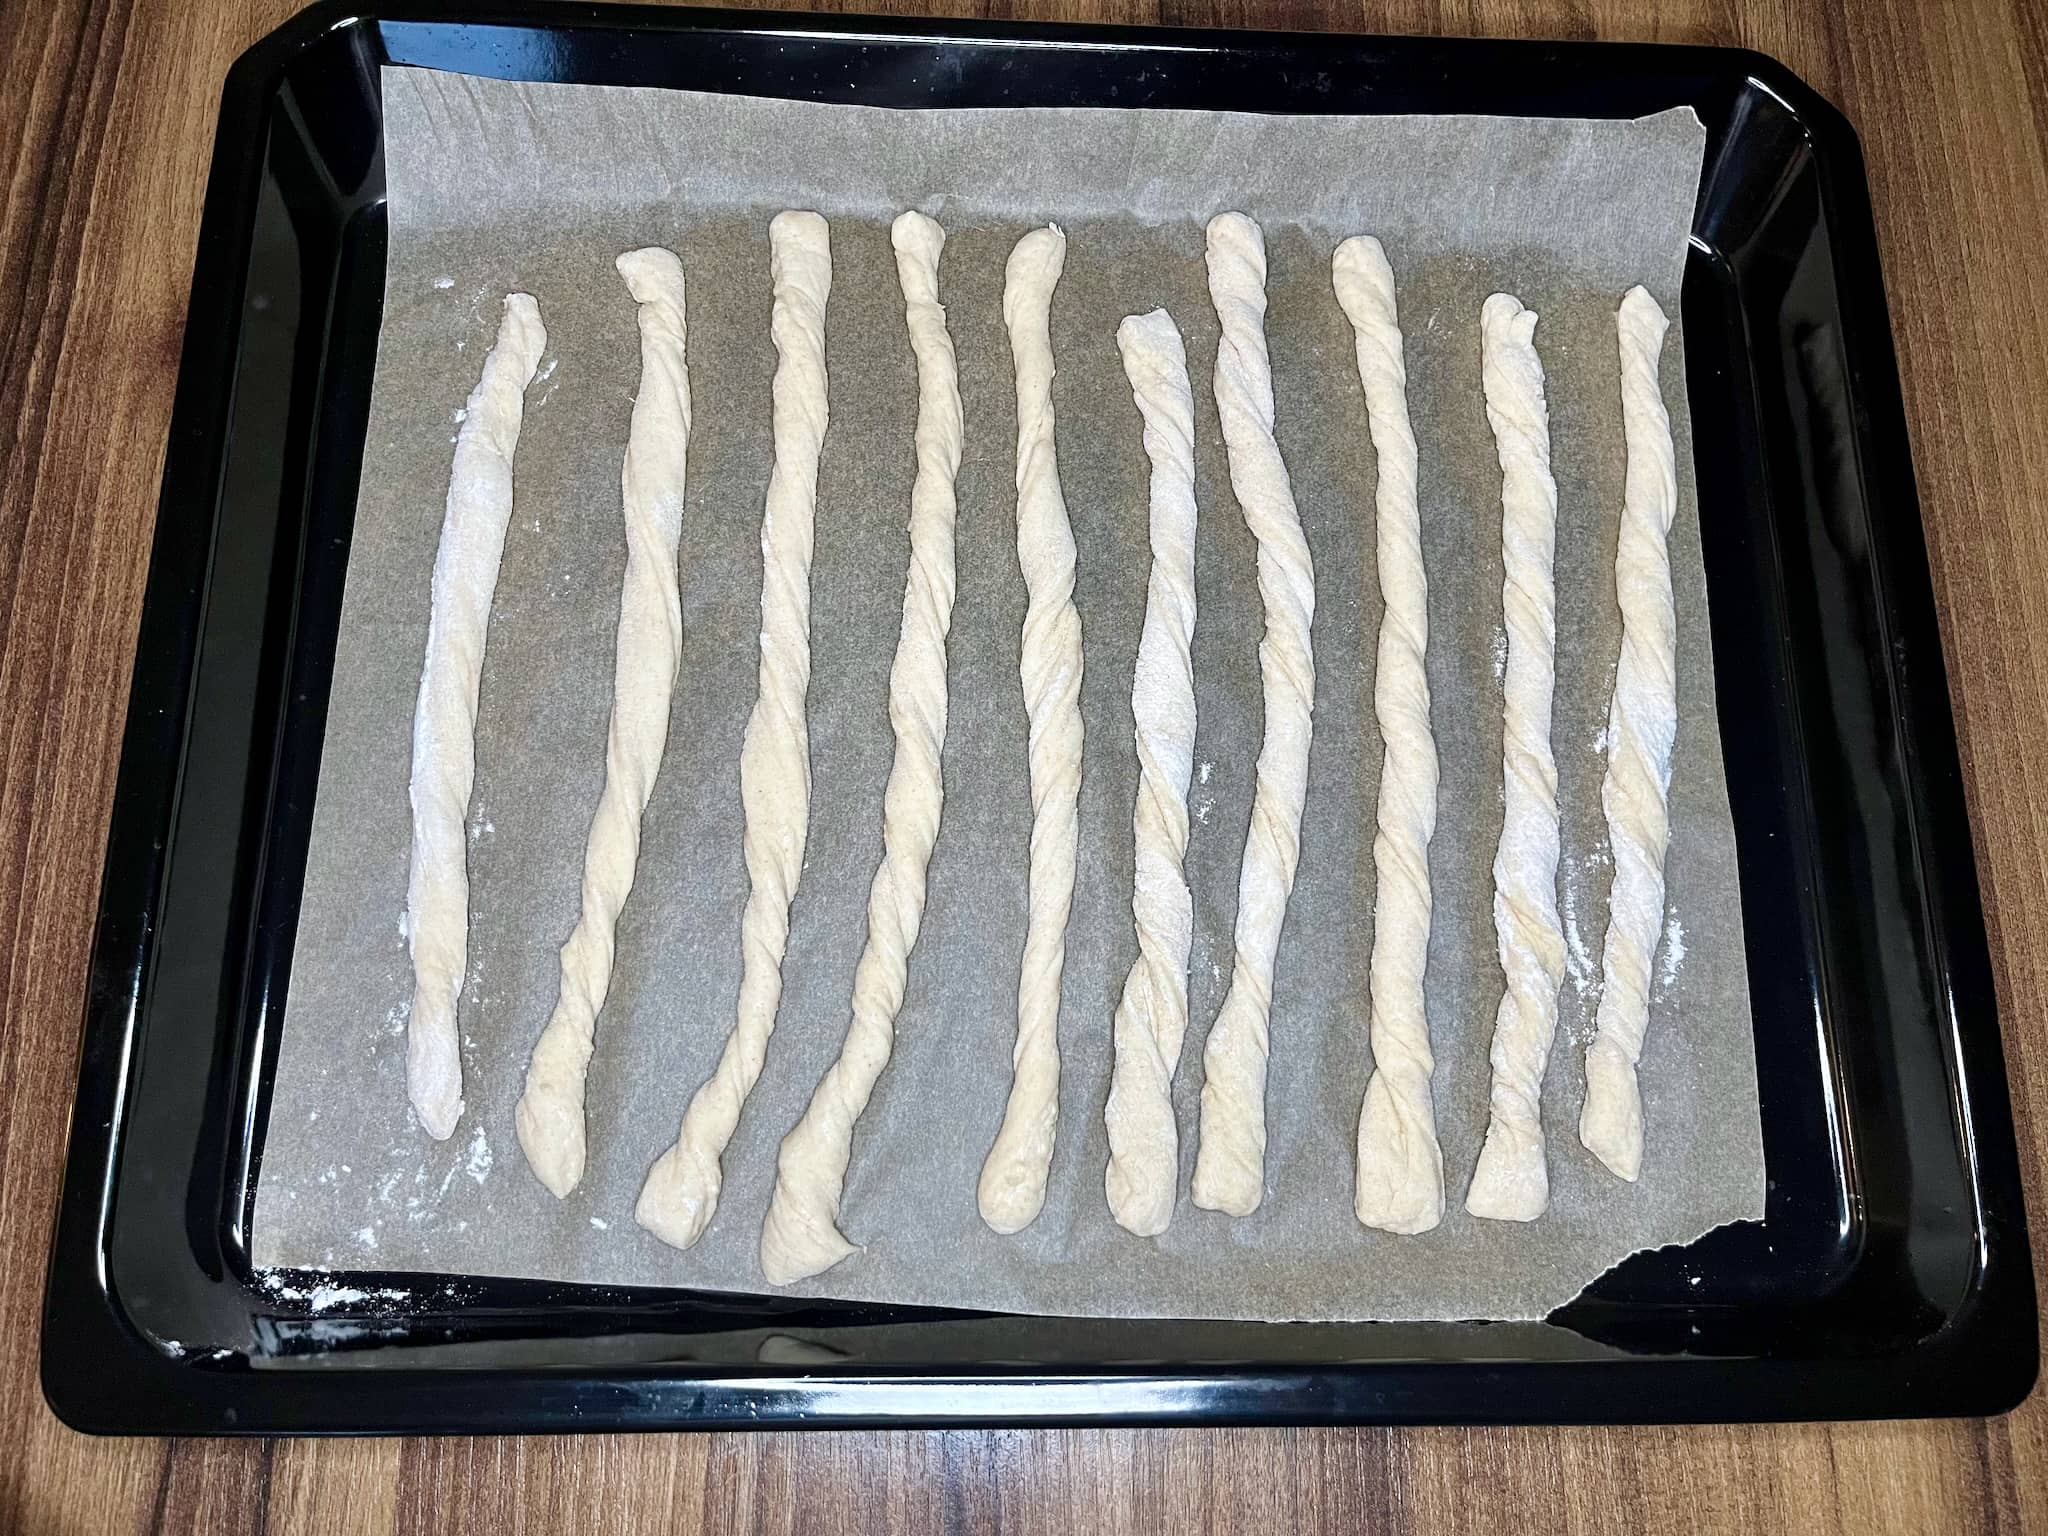 Breadsticks dough on the baking tray